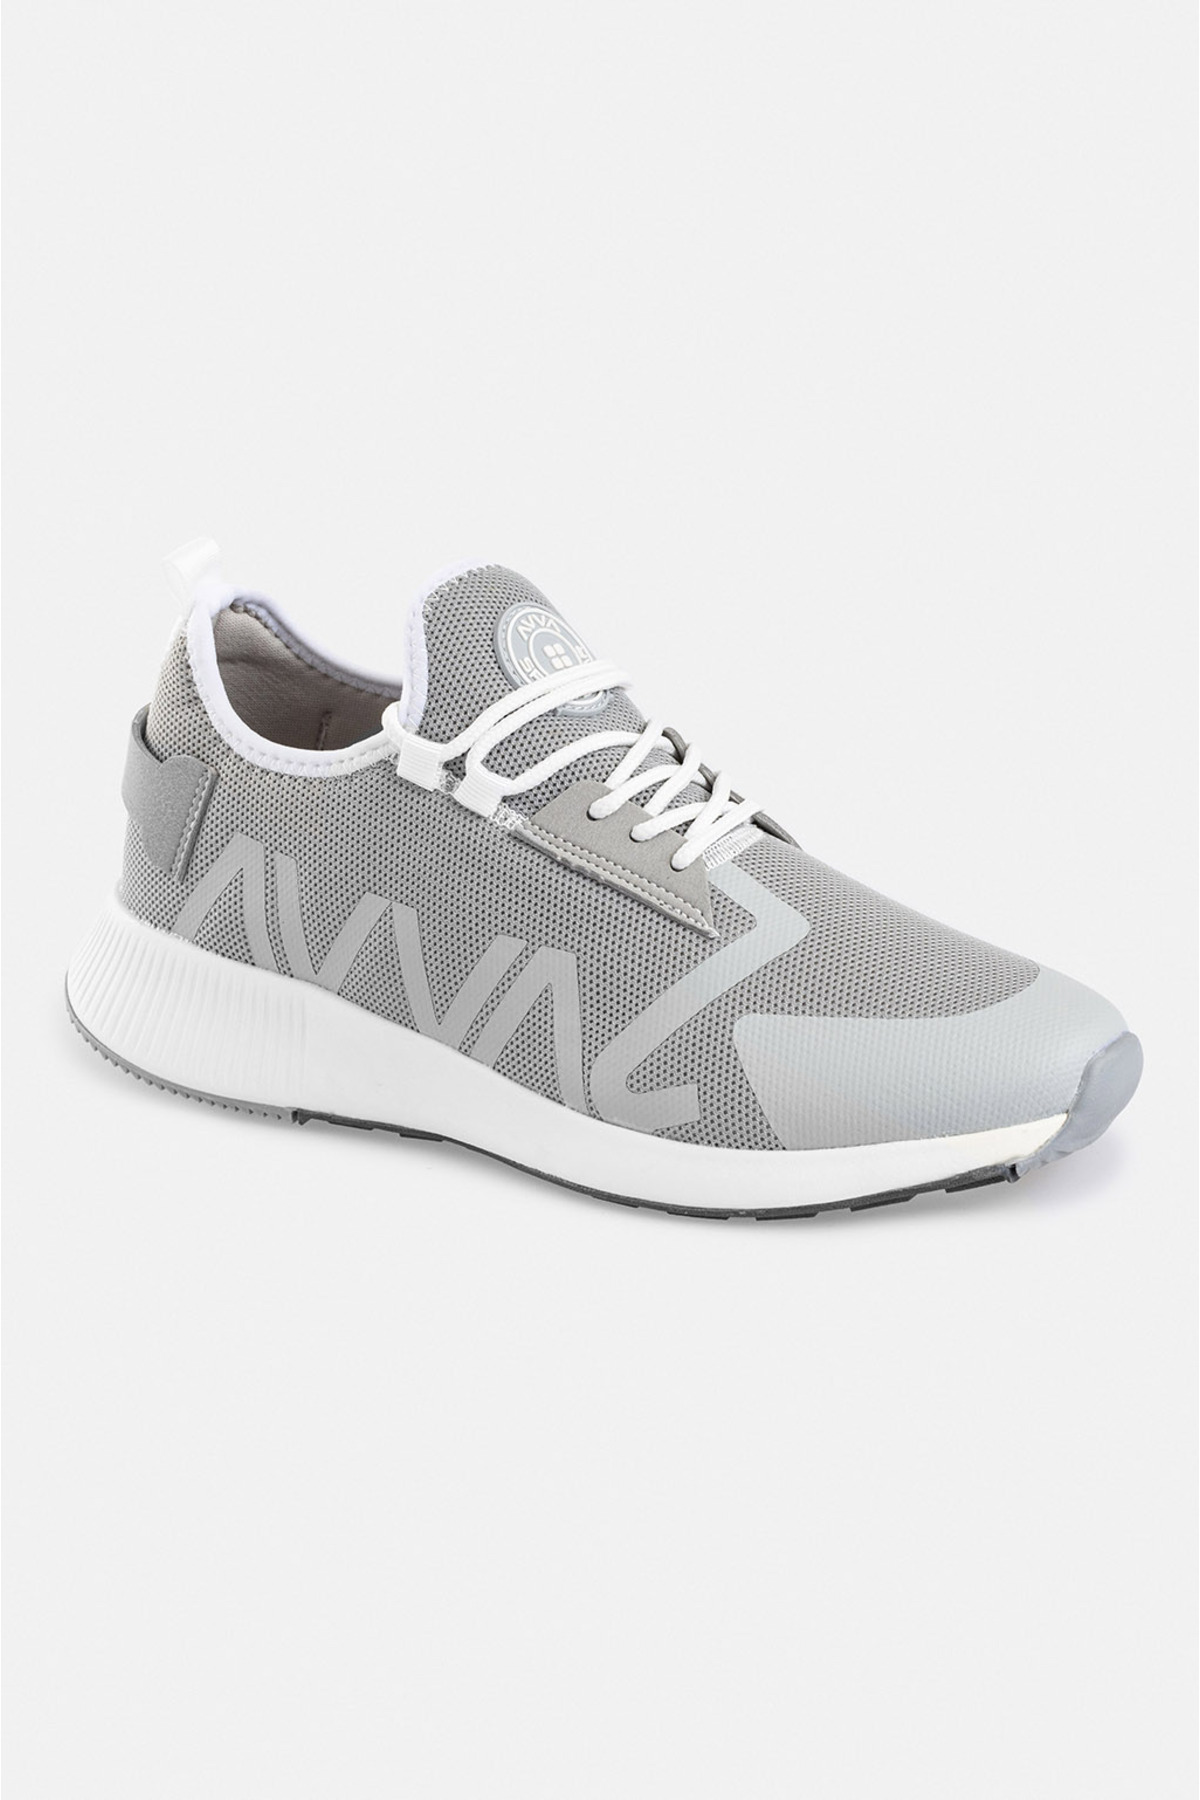 Avva Men's Gray Printed Flexible Sole Casual Sports Shoes